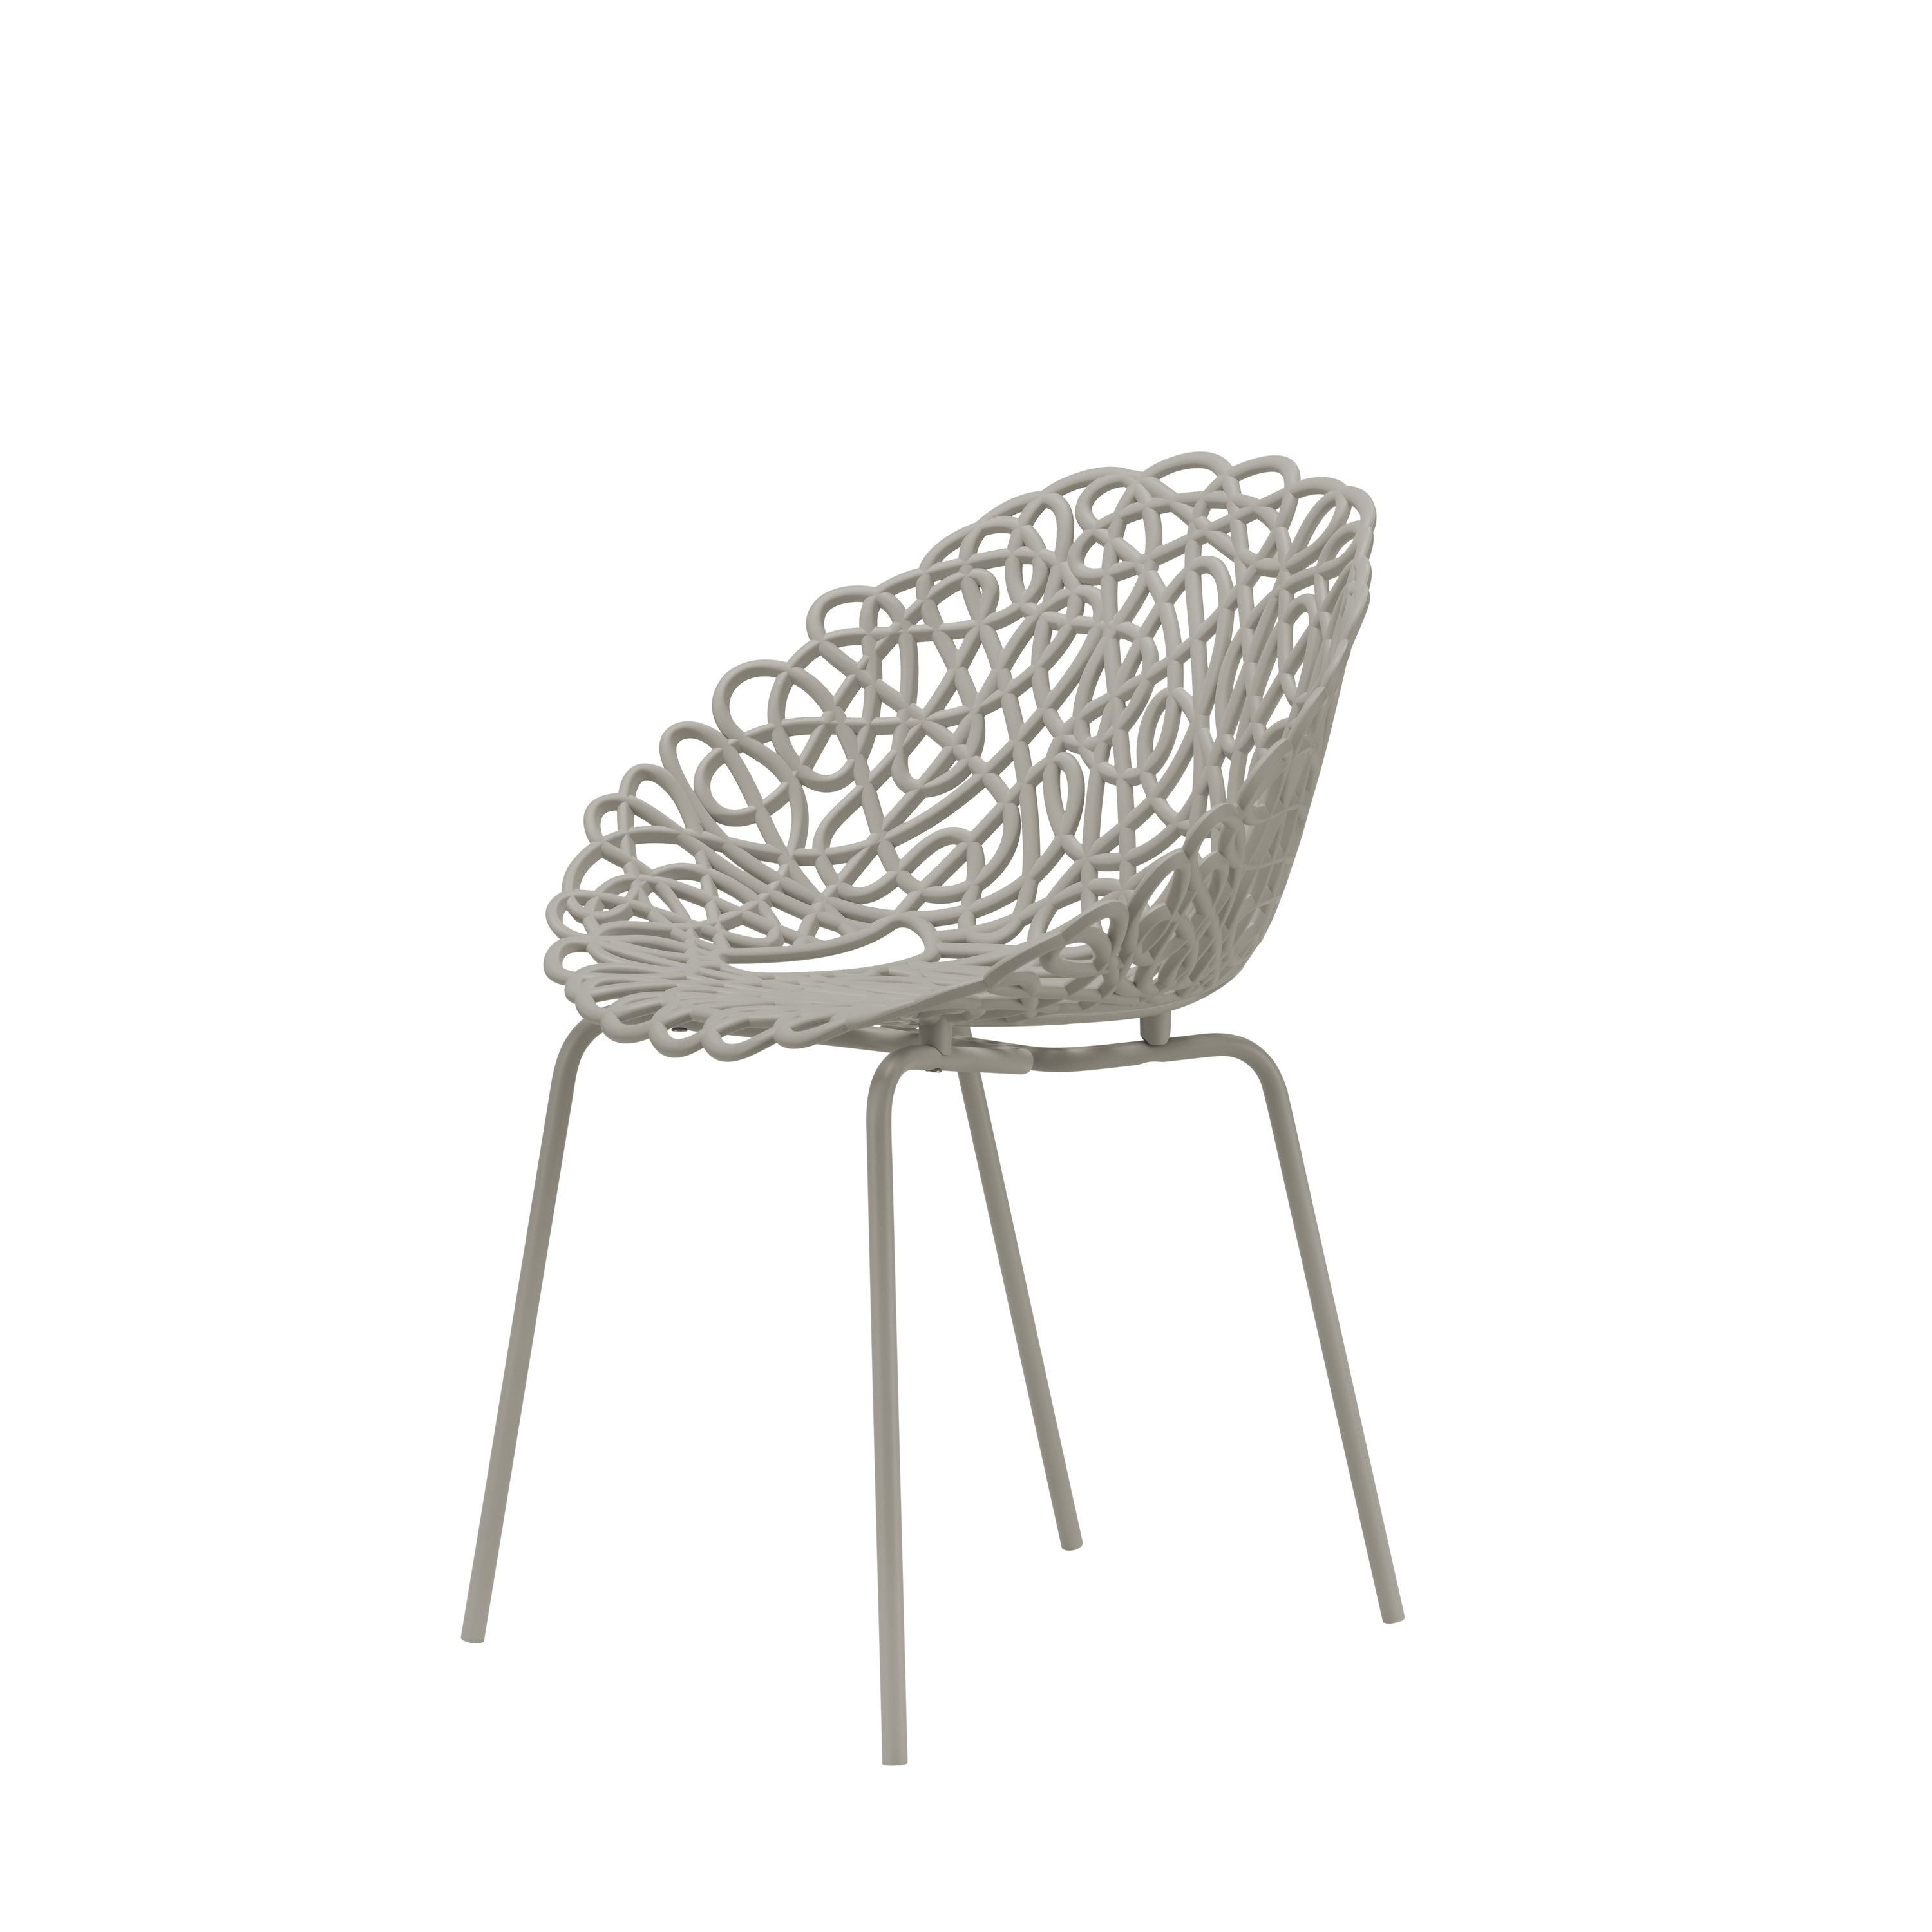 Qeeboo Bacana Chair Outdoor Set Of 2 Pcs, Dove Grey